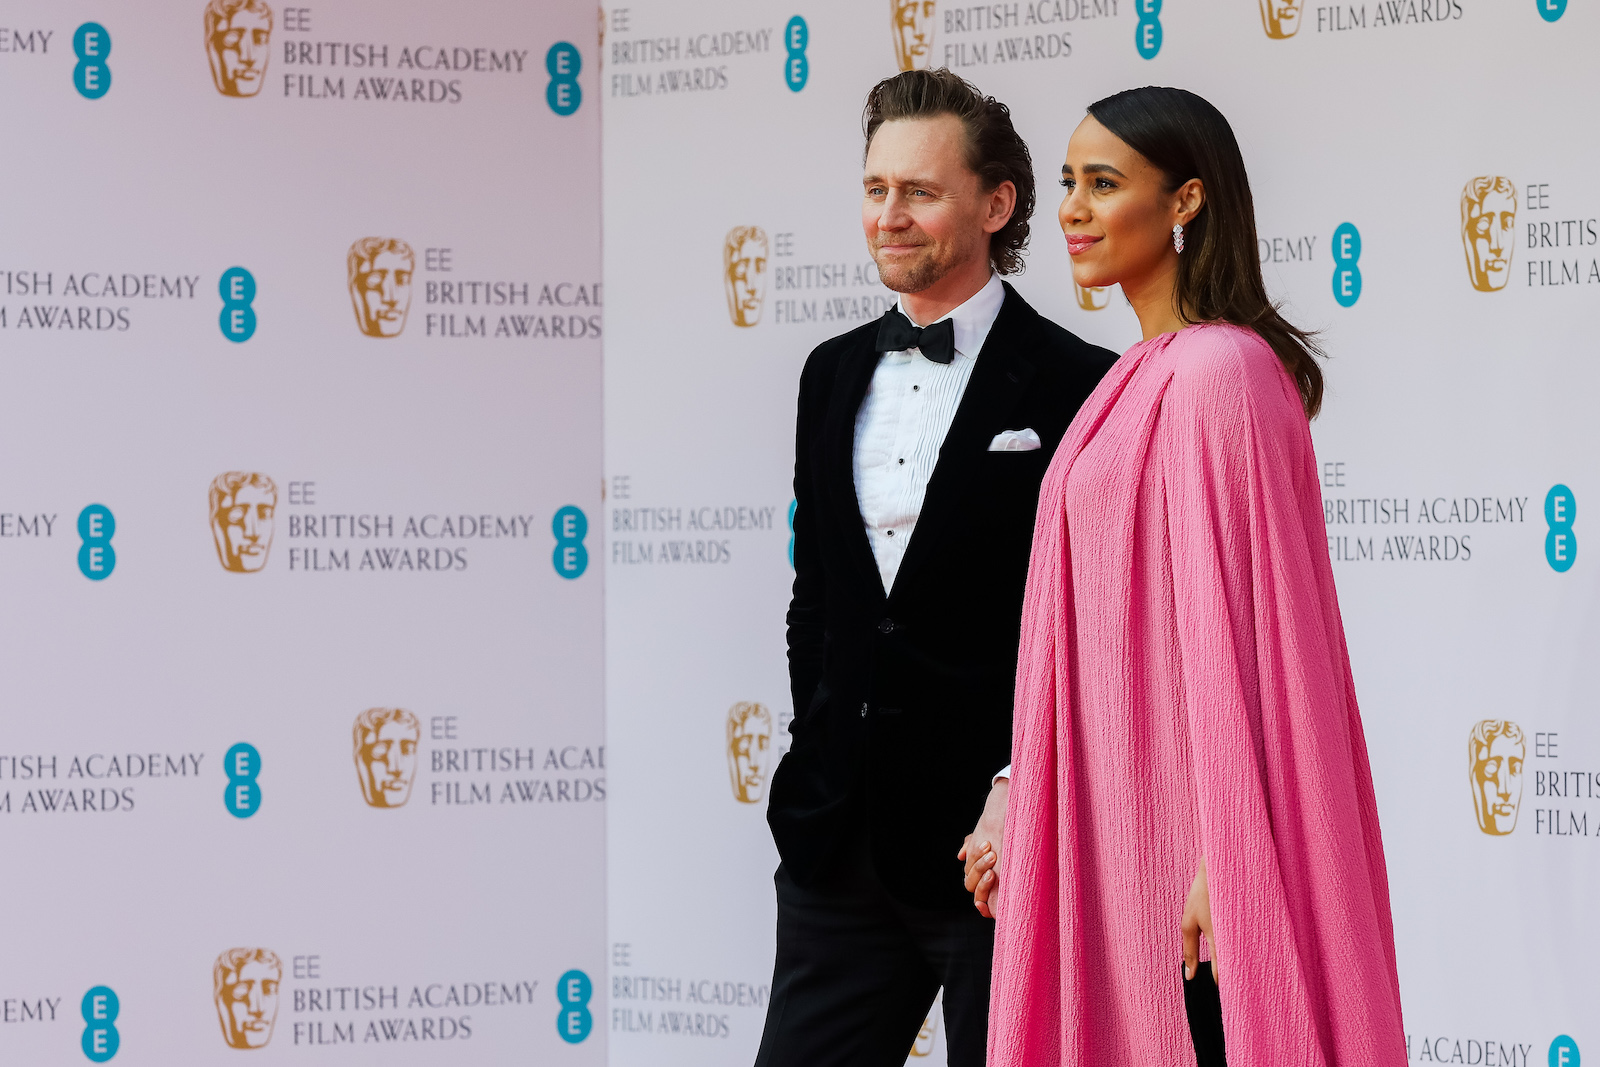 Tom Hiddleston and Zawe Ashton walked the red carpet before the British Academy Film Awards 2022